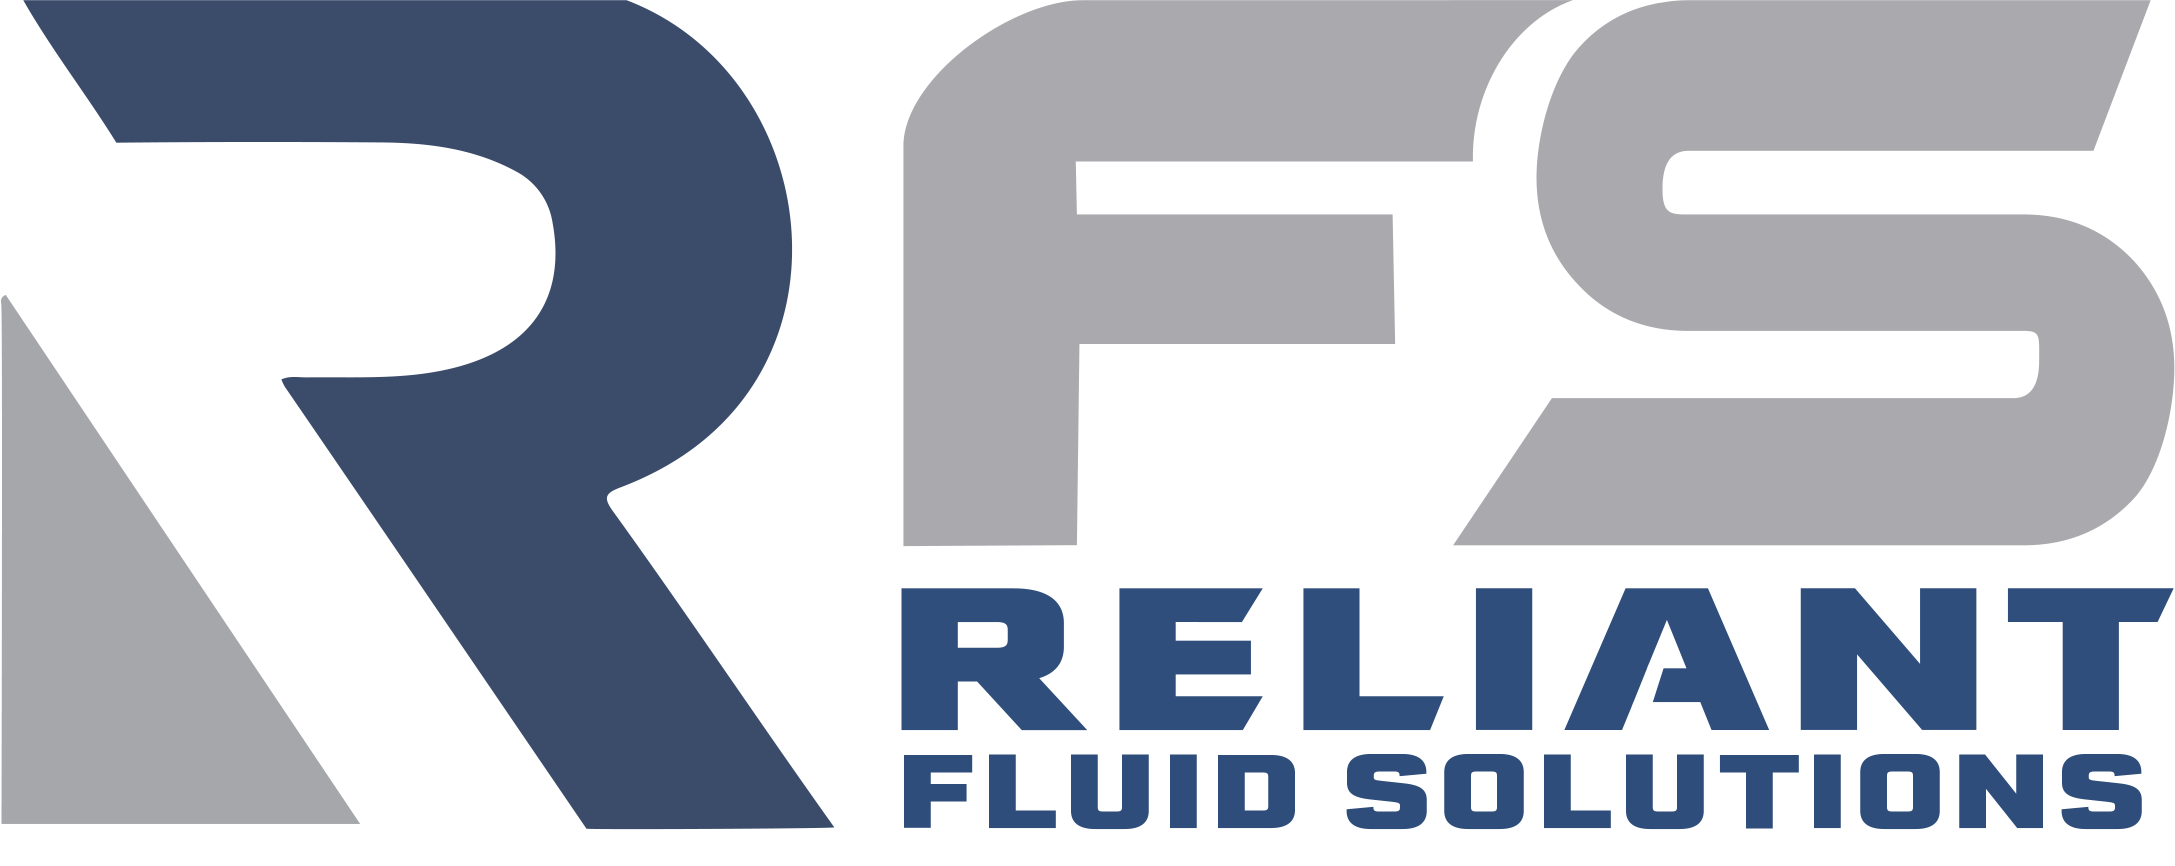 Reliant Fluid Solutions